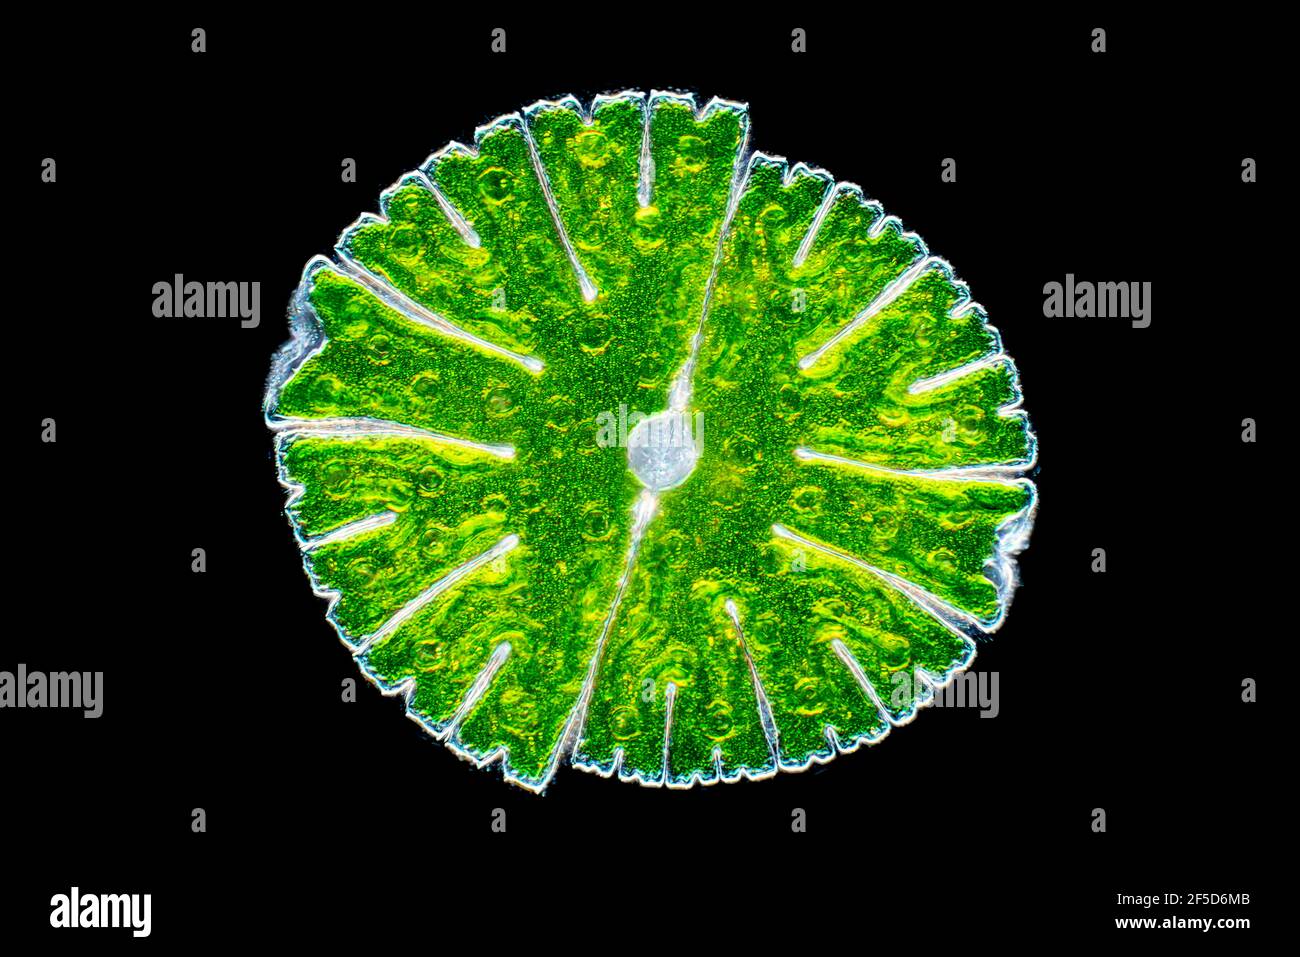 green alga (Micrasterias rotata), dark field microscopic image, magnification x100 related to 35 mm, Germany Stock Photo